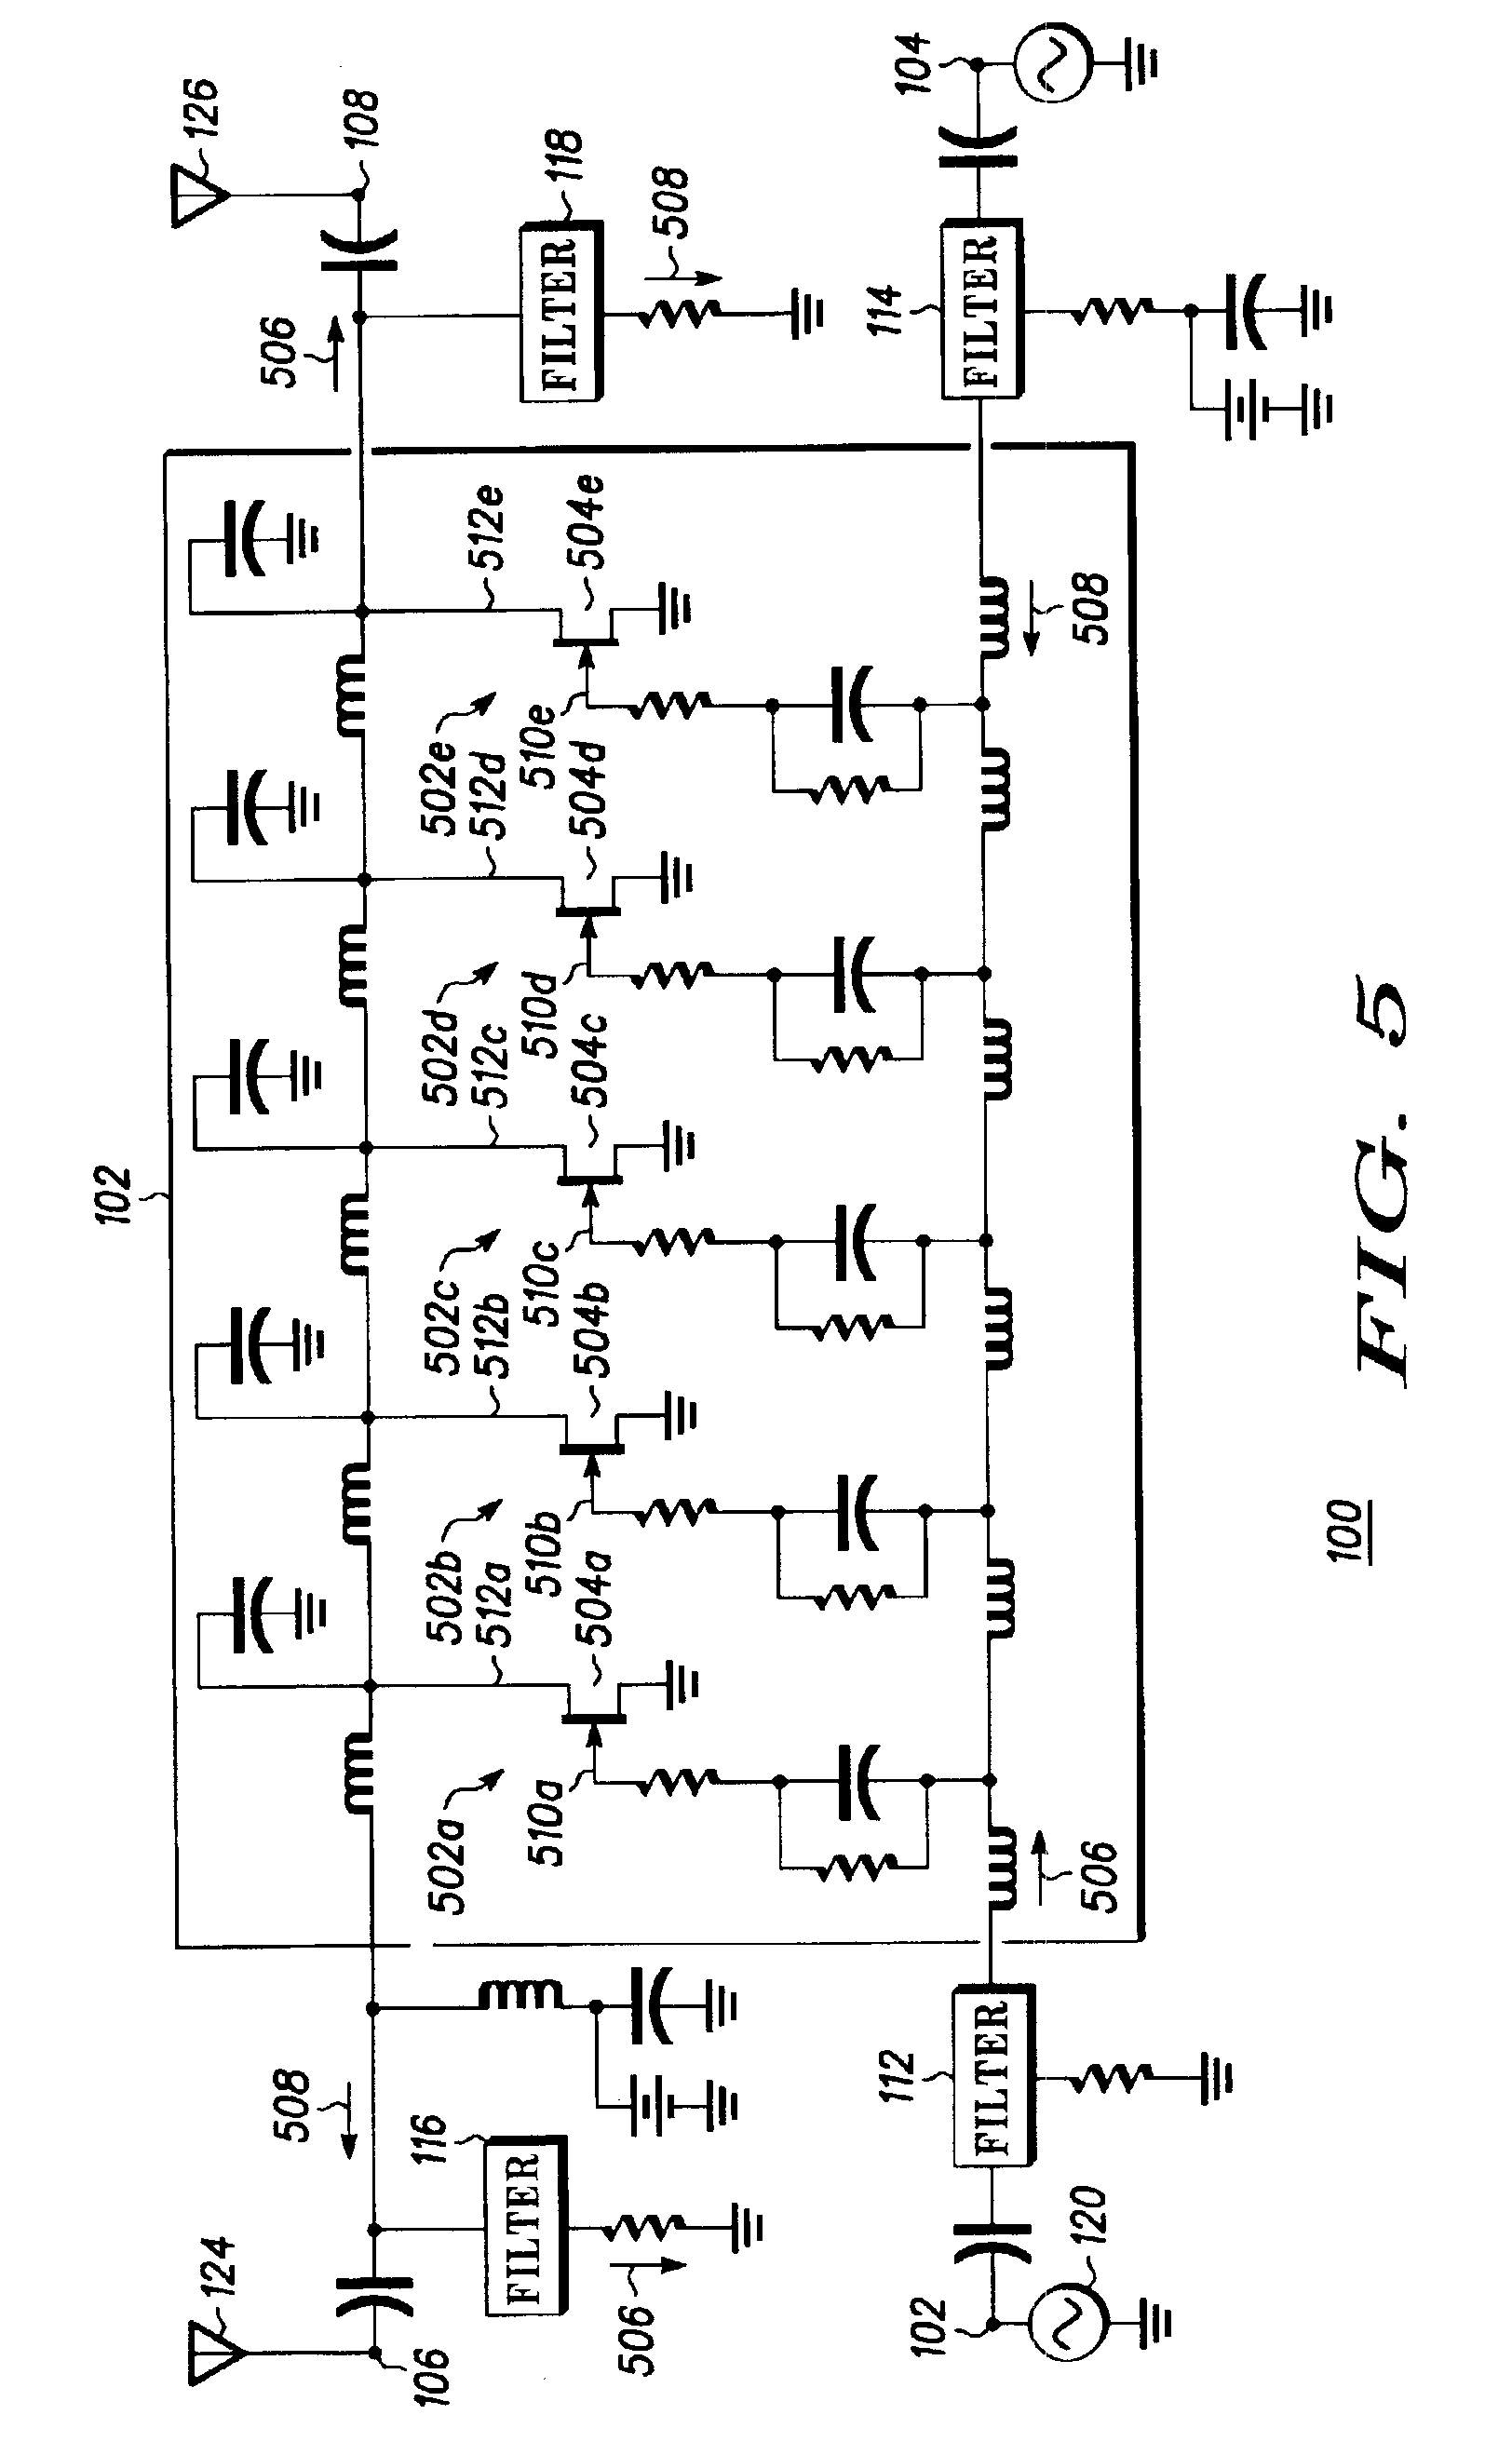 Bidirectional distributed amplifier